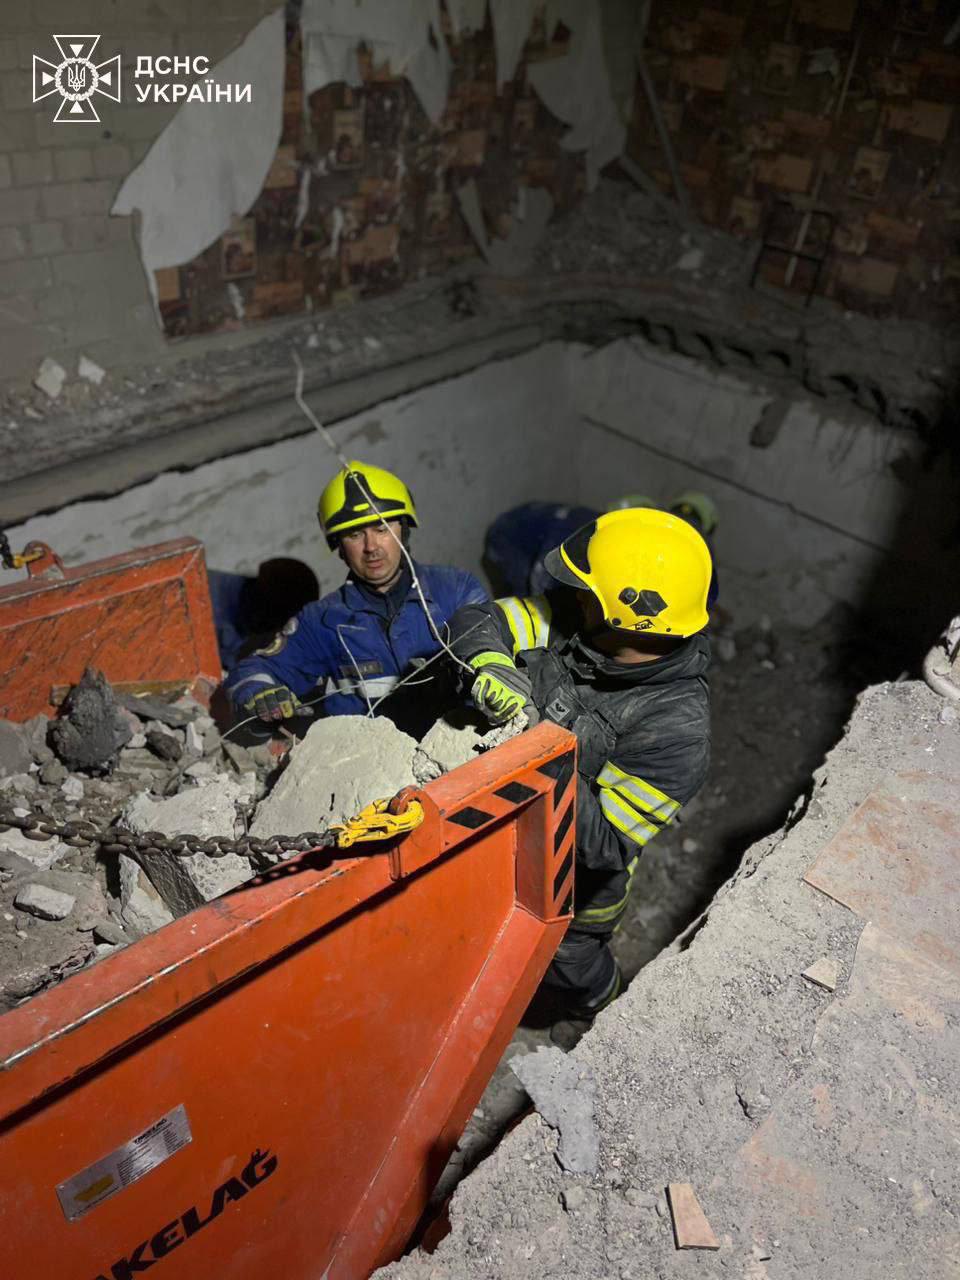 Rescue services are dismanting the rubble